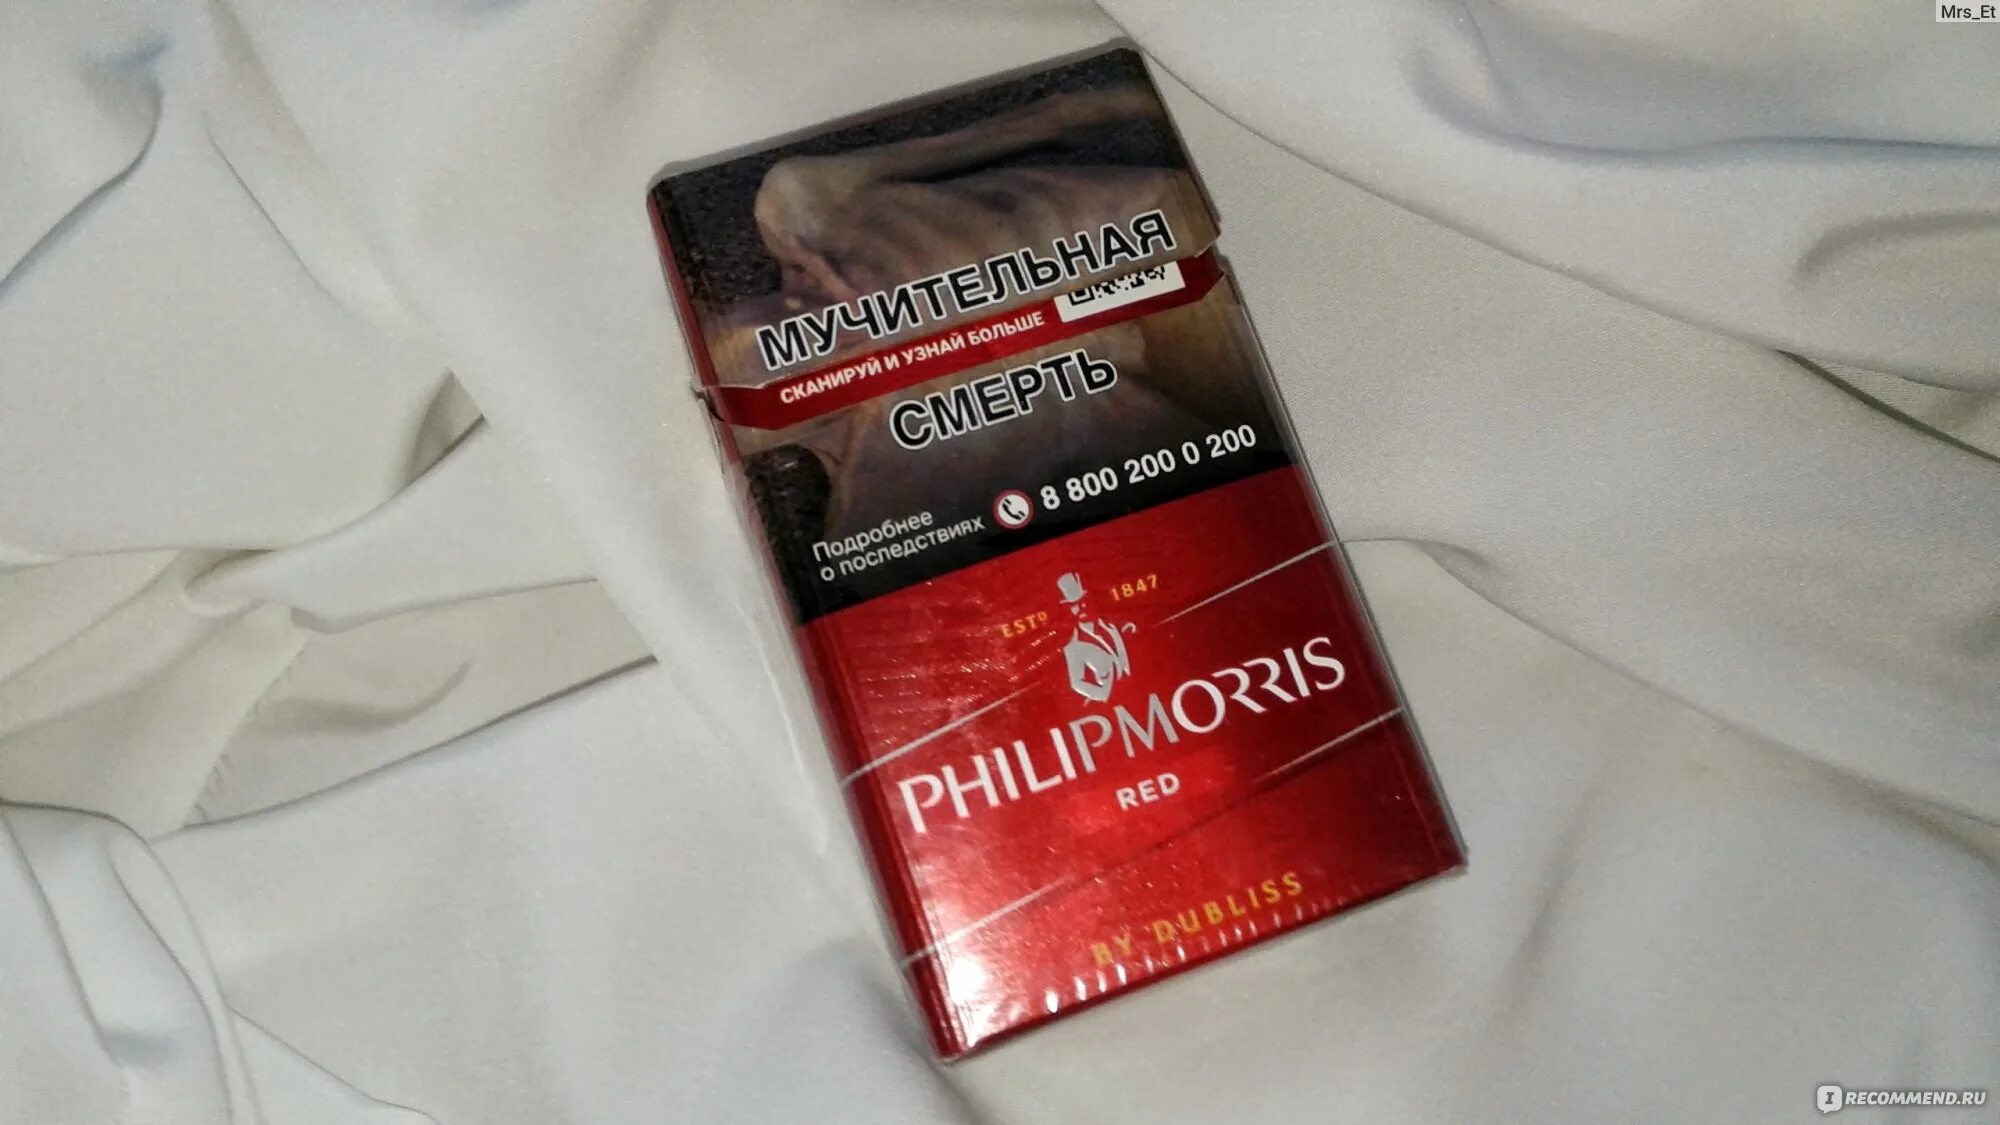 Филипс Морис сигареты красные. Сигареты Филип Моррис ред. Сигареты Philip Morris красный. Филипс Морис красный. Сигареты филипс